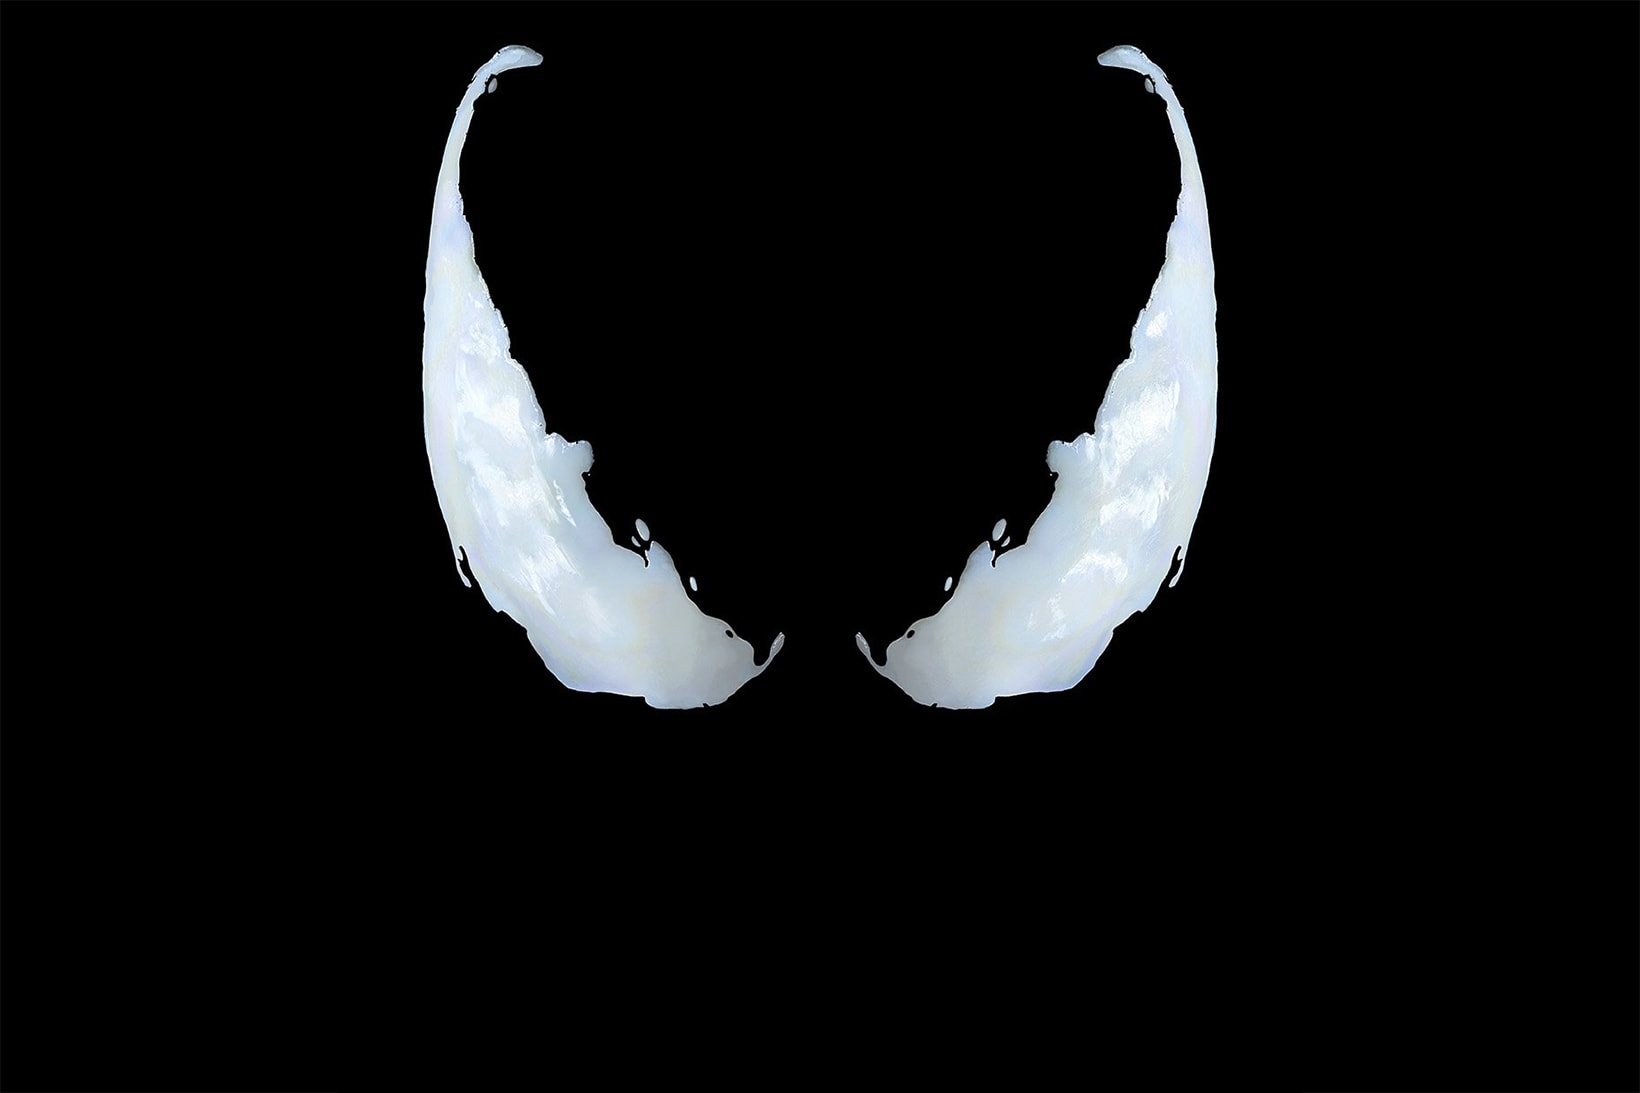 Marvel Venom announcement films Marvel Studios entertainment Tom Hardy Poster Release Date October 5 2018